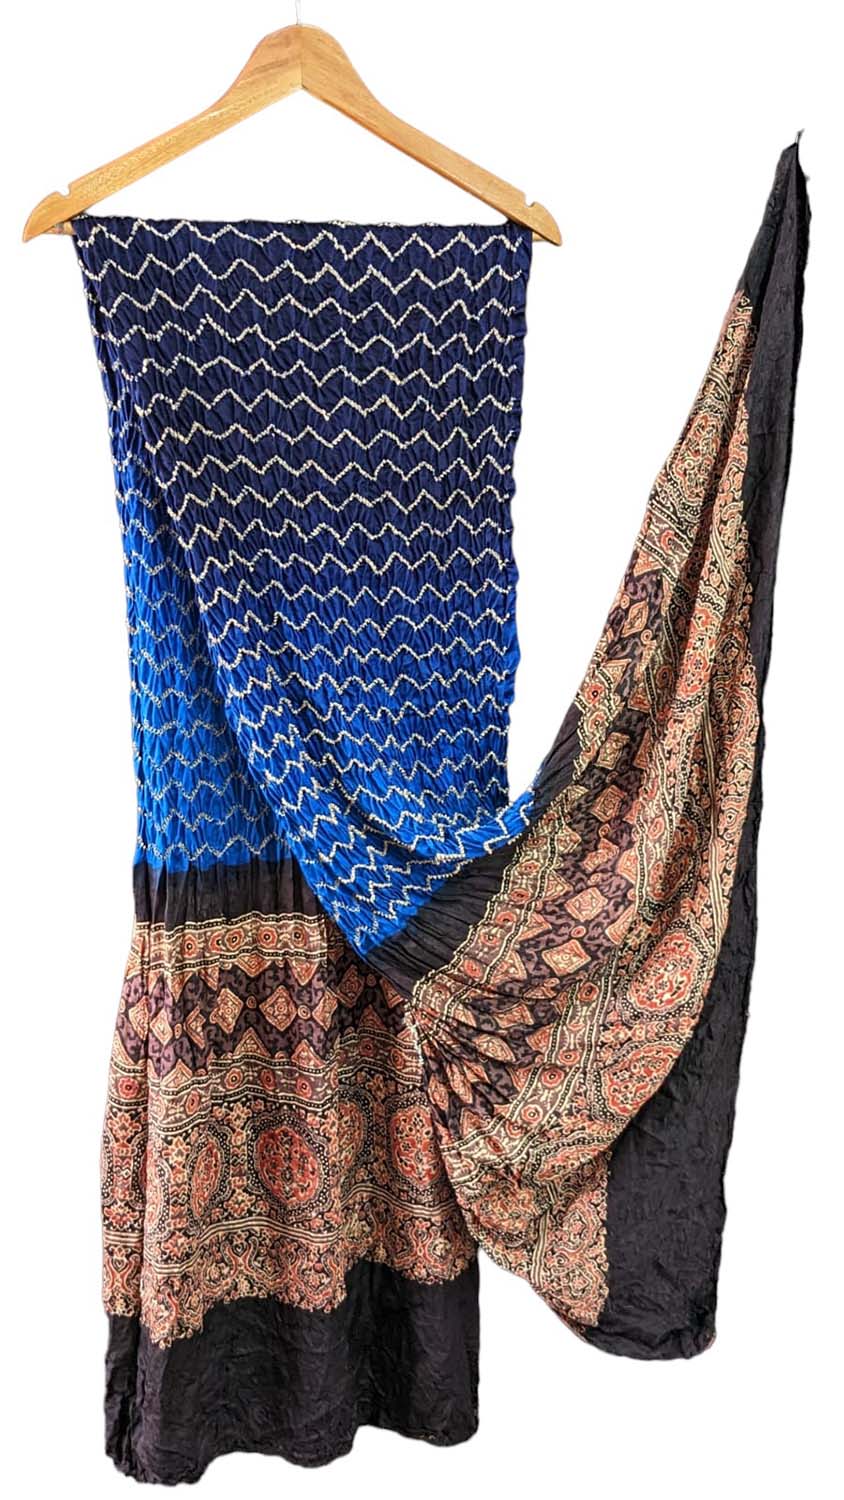 Shop Now for Blue Ajrakh Bandhani Gajji Silk Dupatta - Ethnic Fashion Accessory - Luxurion World